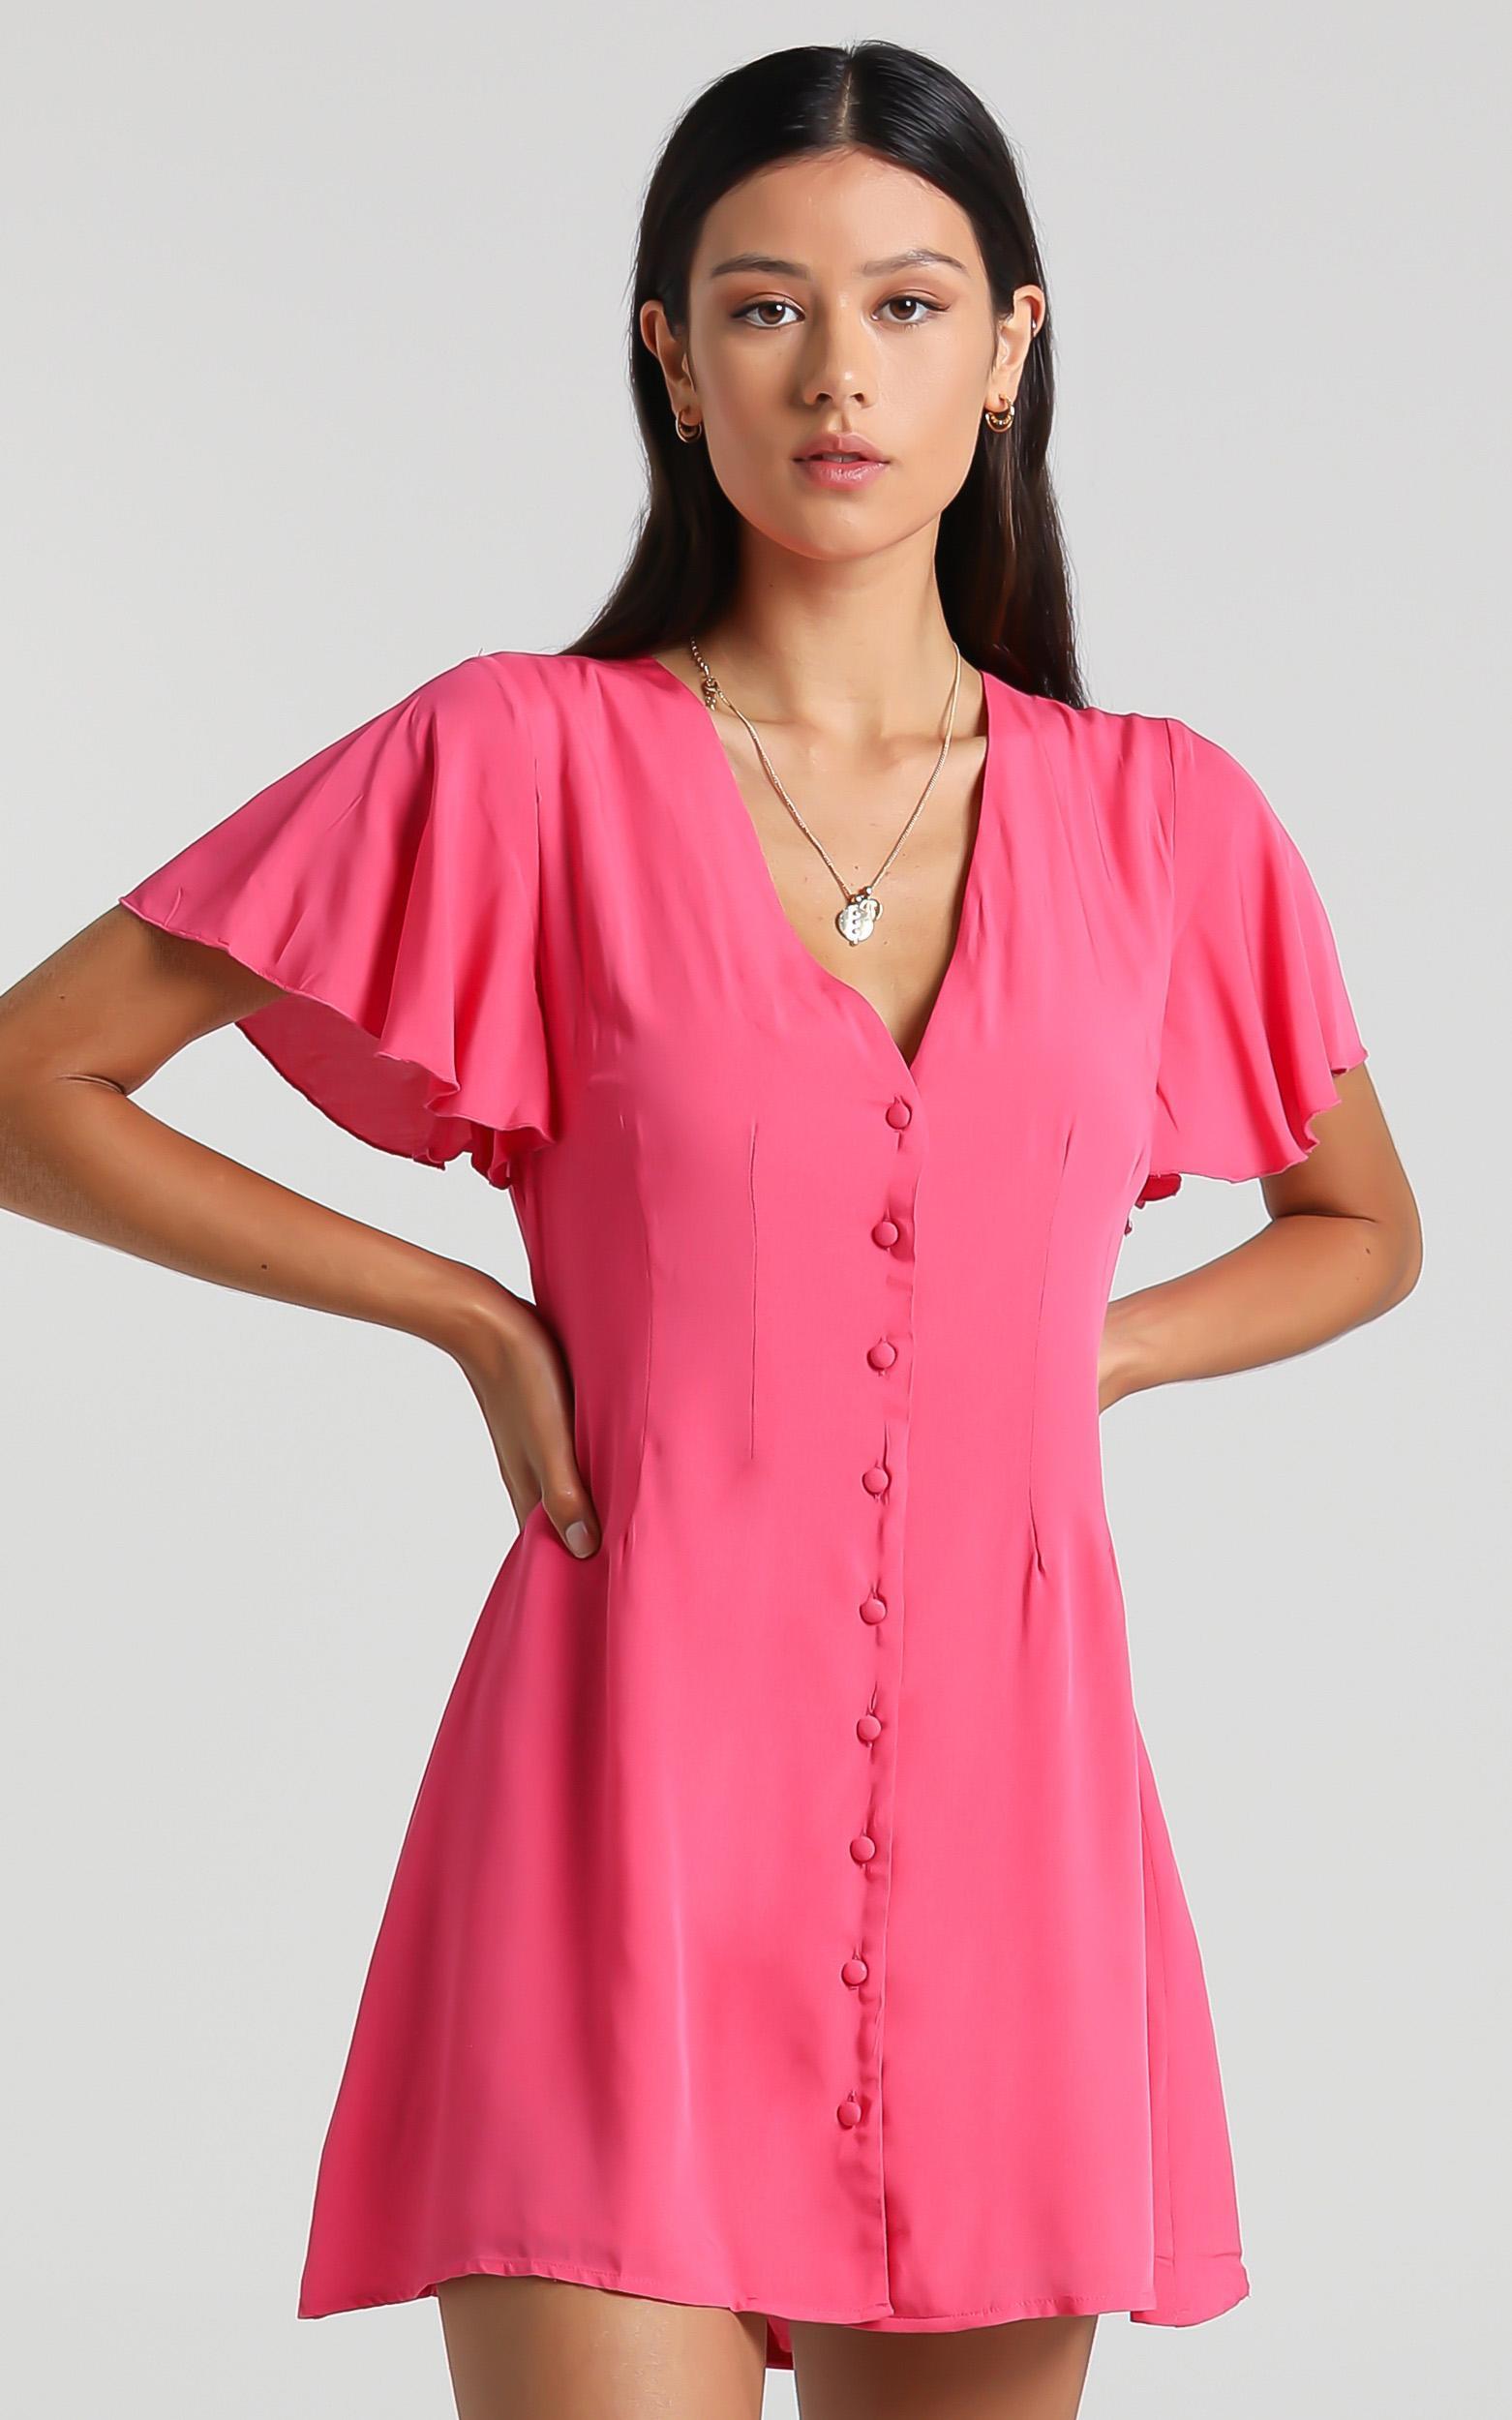 Daiquiri Dress in Pink - 6 (XS), Pink, hi-res image number null